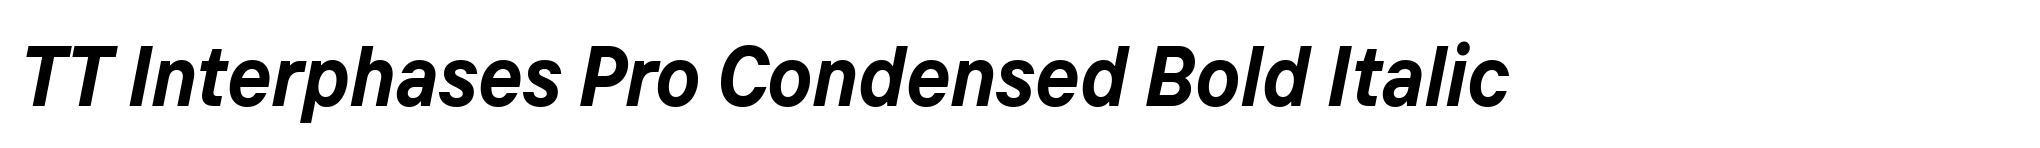 TT Interphases Pro Condensed Bold Italic image